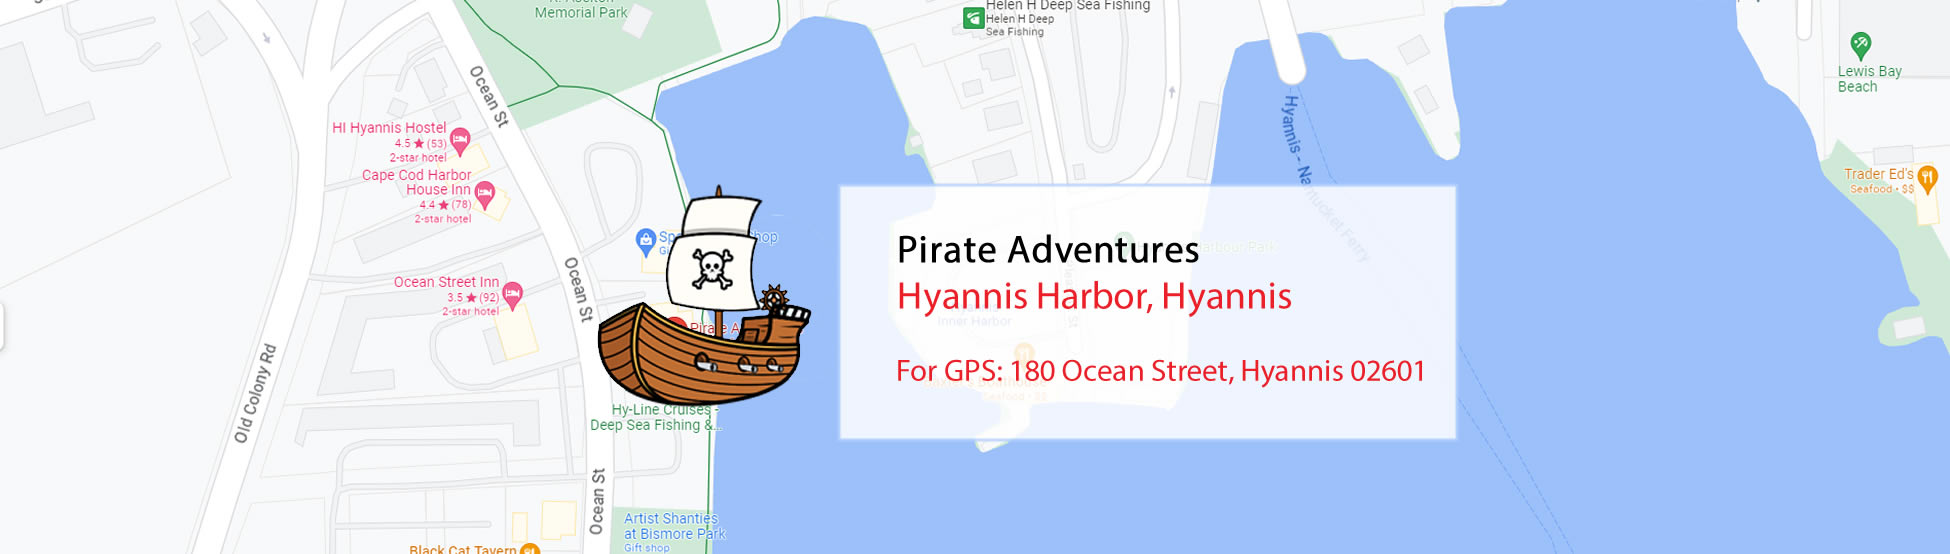 Cape Cod Pirate Adventures